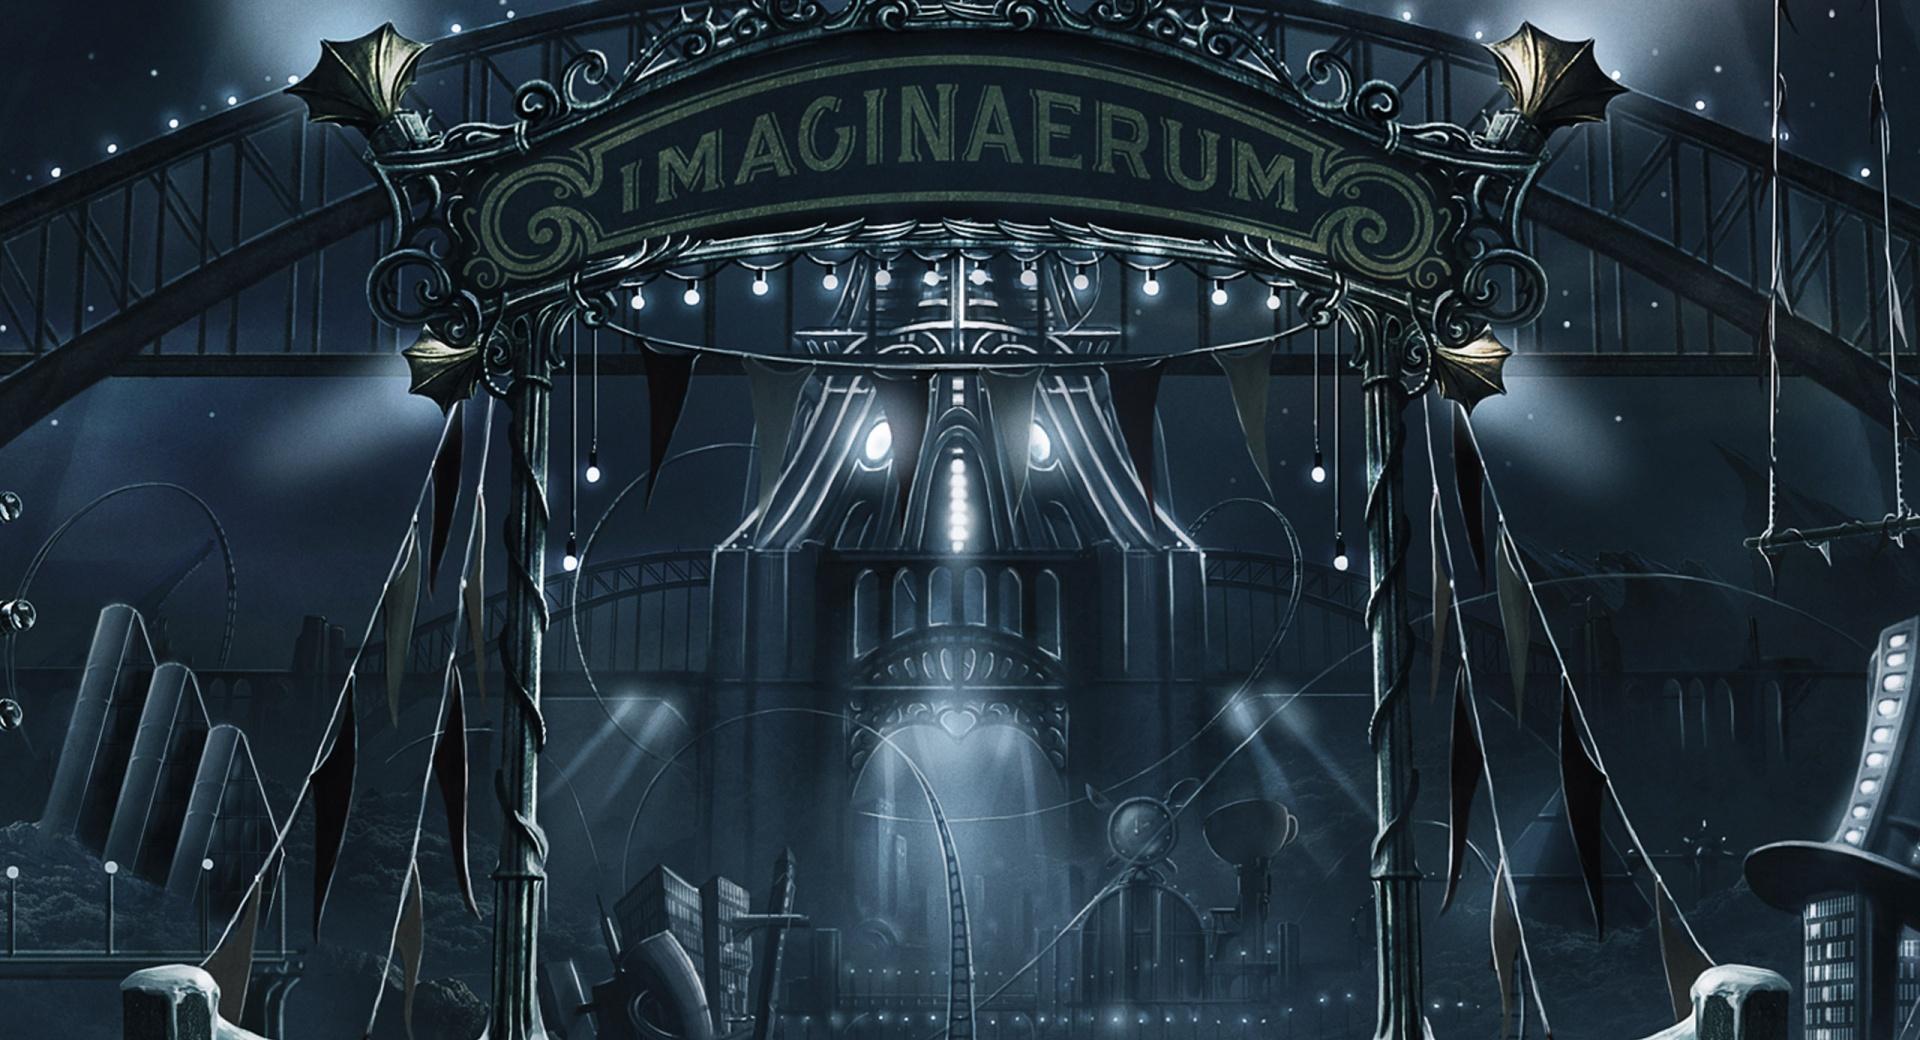 Imaginaerum - Nightwish at 1280 x 960 size wallpapers HD quality